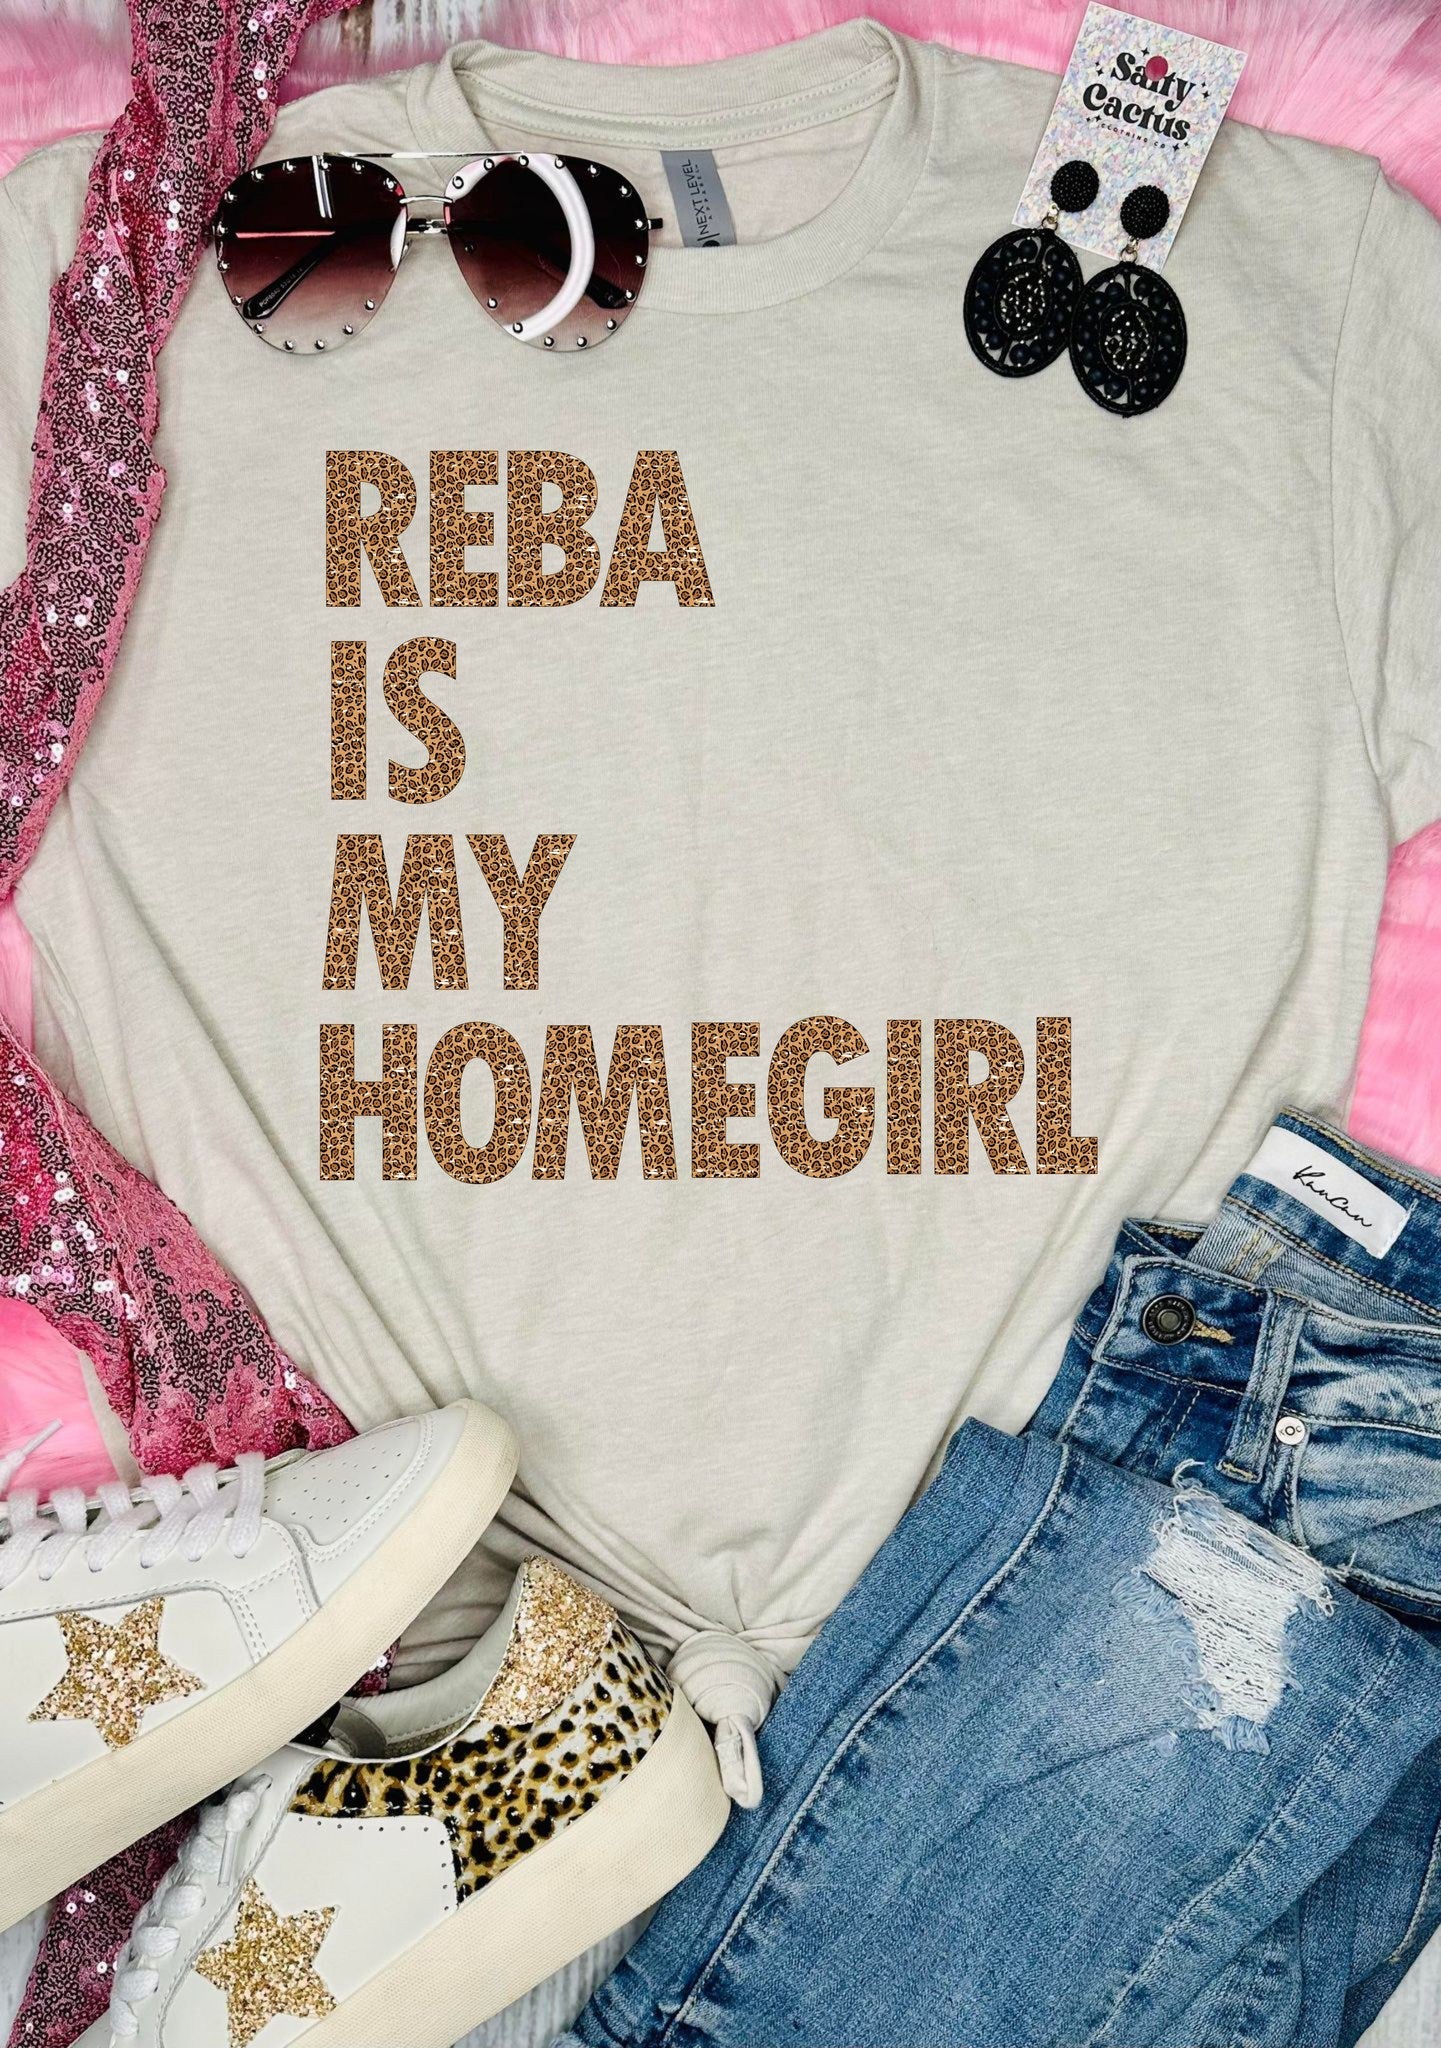 Reba Is My Home Girl Tan Tee